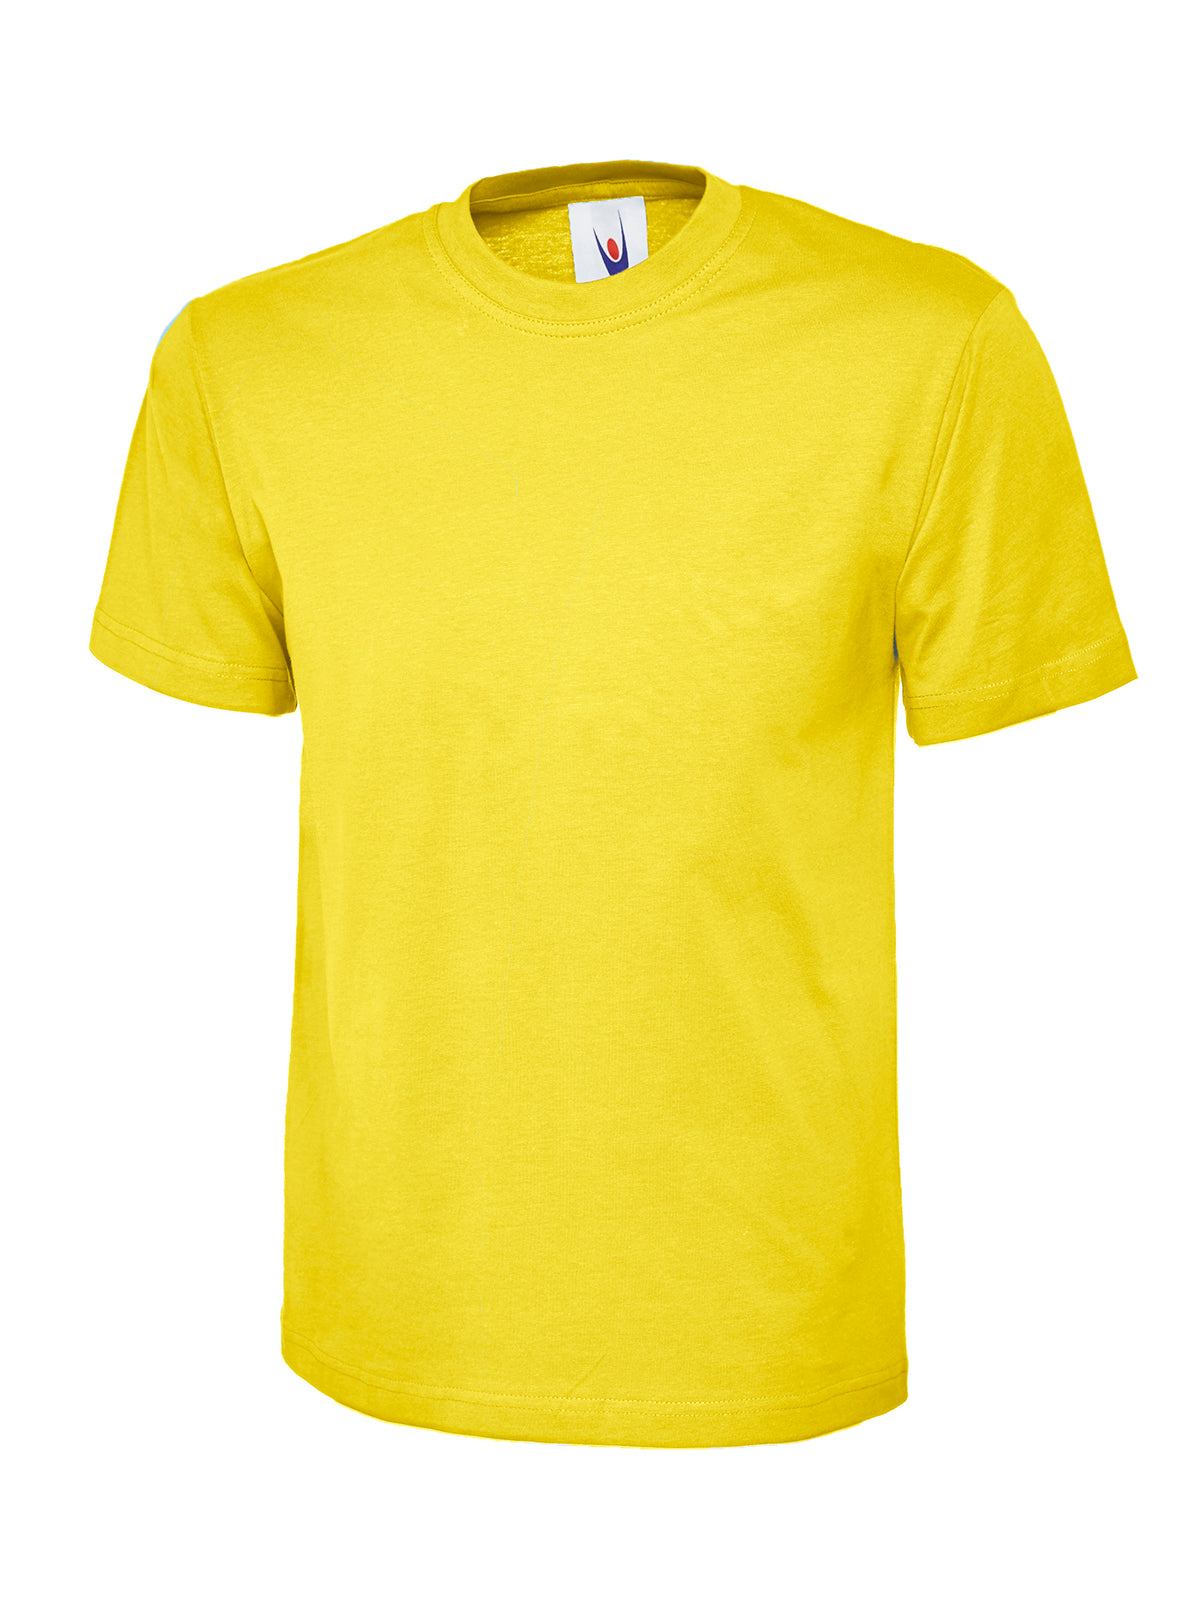 Uneek Classic T-shirt - Yellow